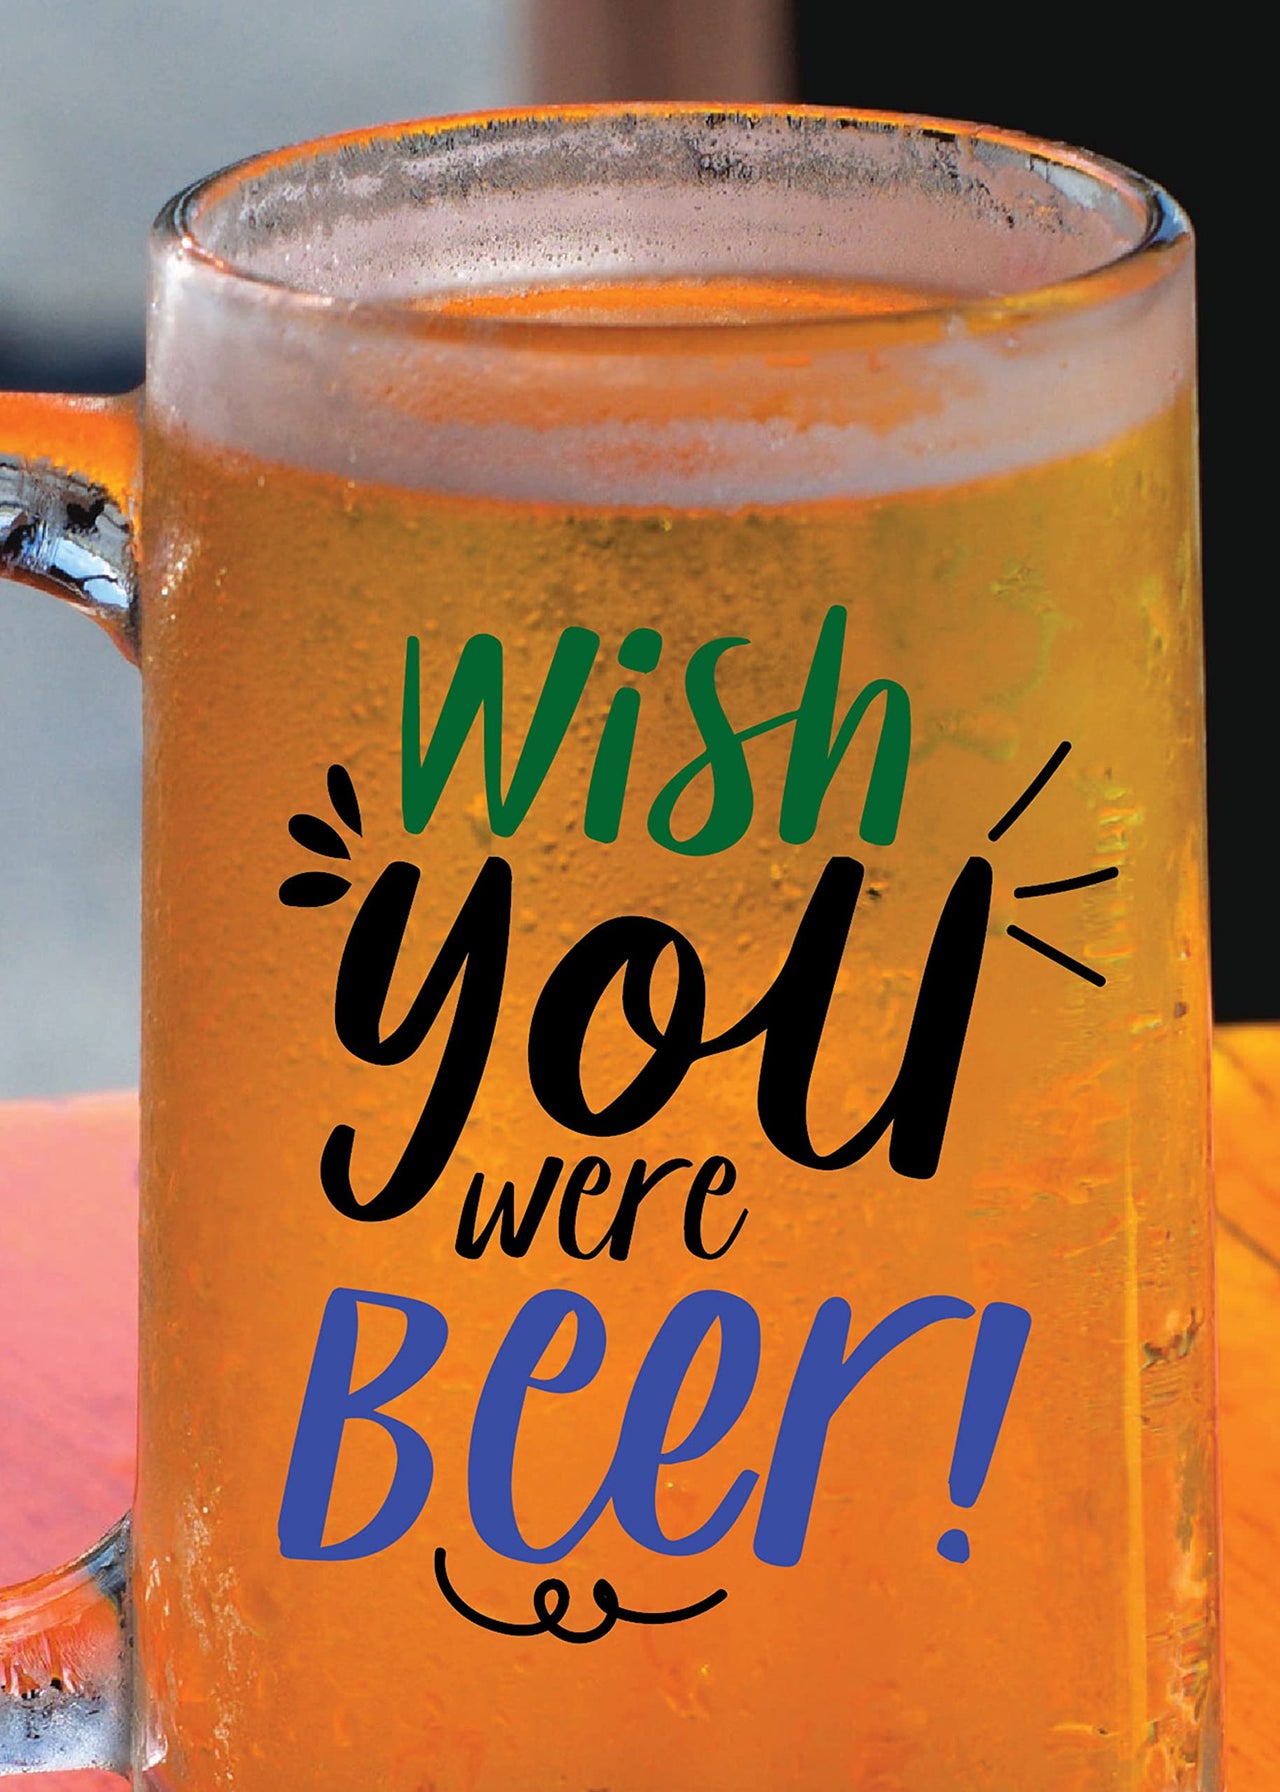 Wish You were Beer - Beer Mug - 1 Piece, Clear, 500 ml - Transparent Glass Beer Mug -Printed Beer Mug with Handle Gift for Men